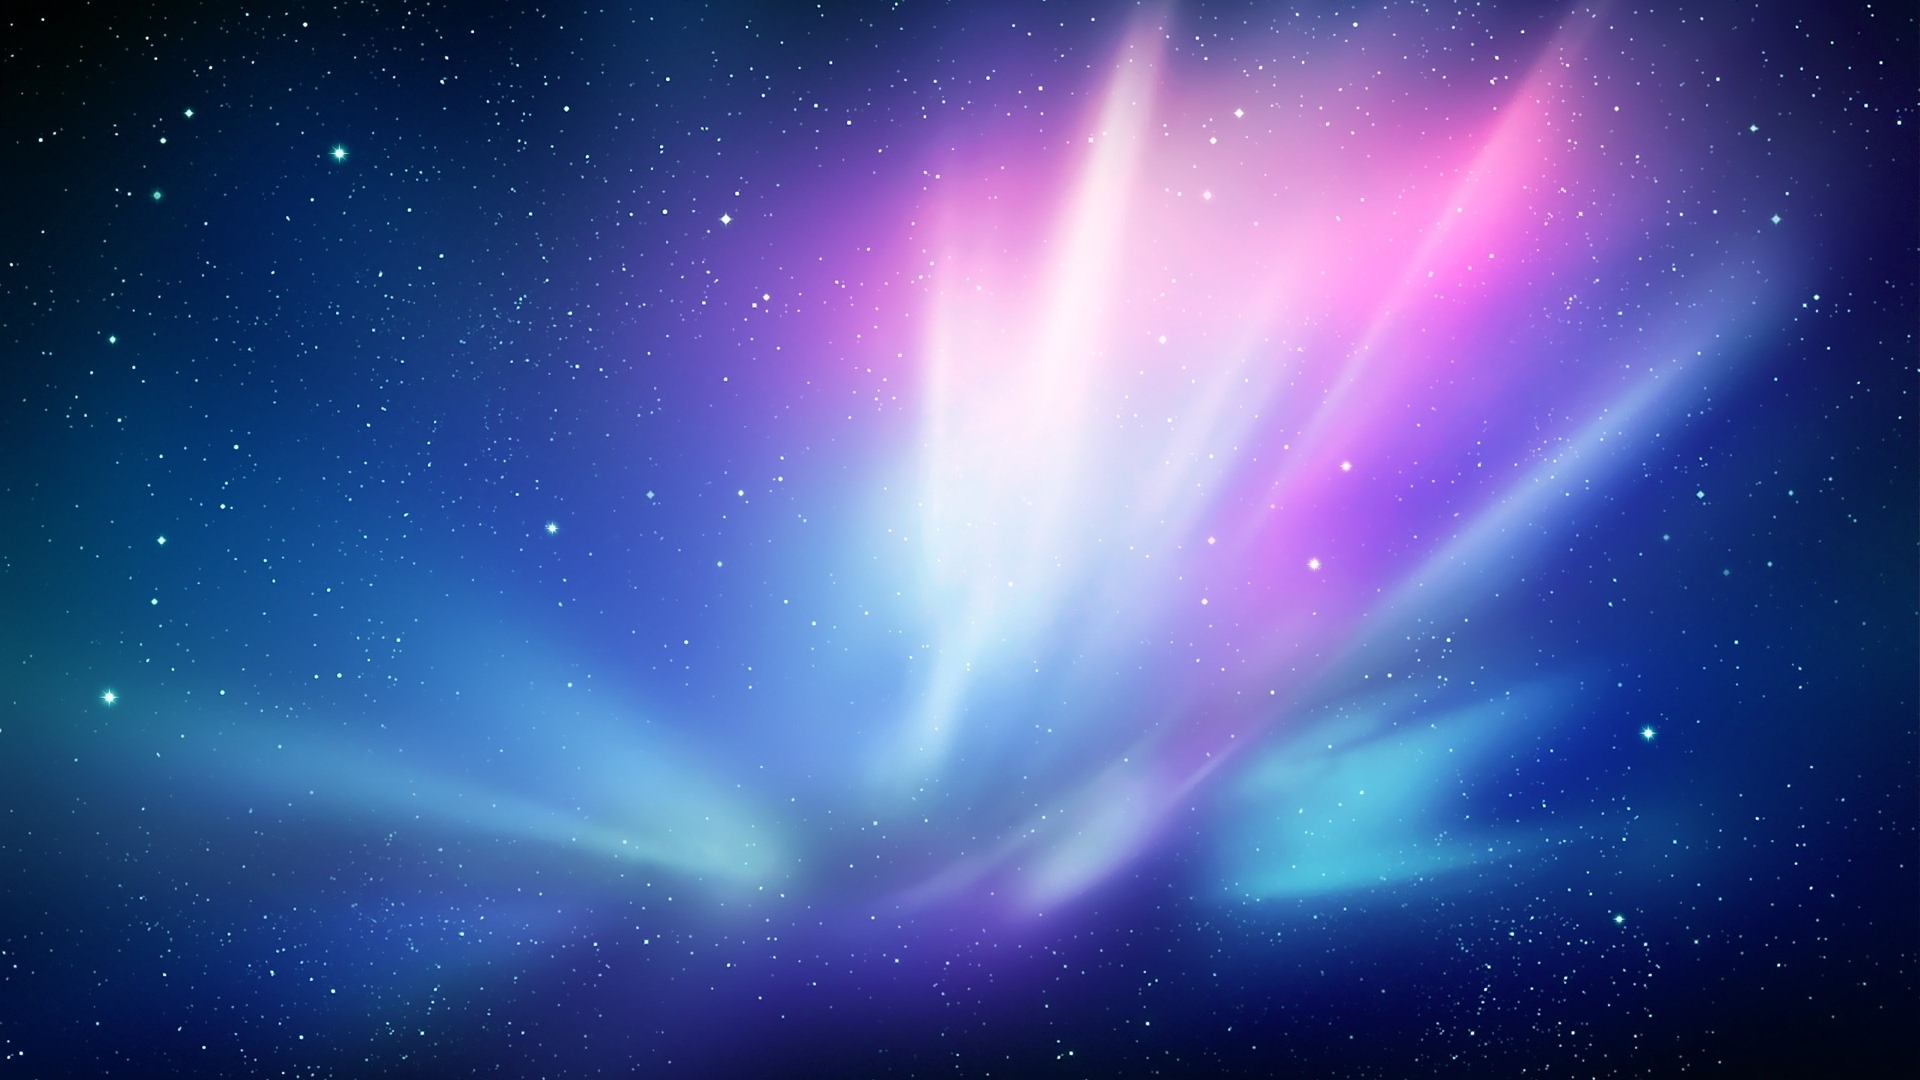 Free download Download Wonderful purple blue galaxy wallpaper in Space